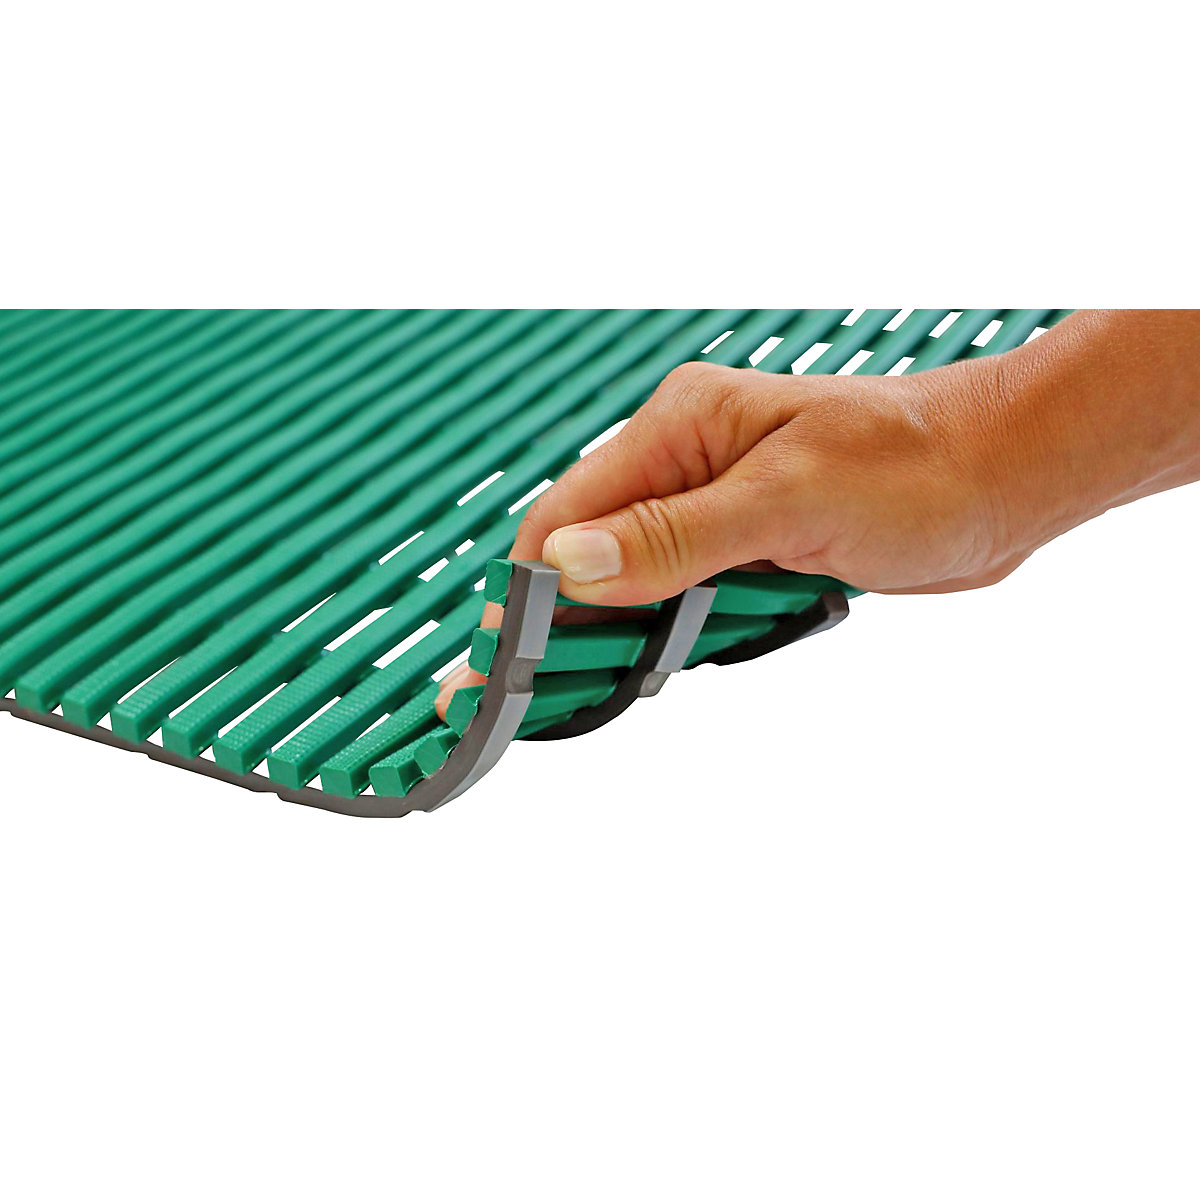 Wet room mat, anti-bacterial, 10 m roll, green, width 600 mm